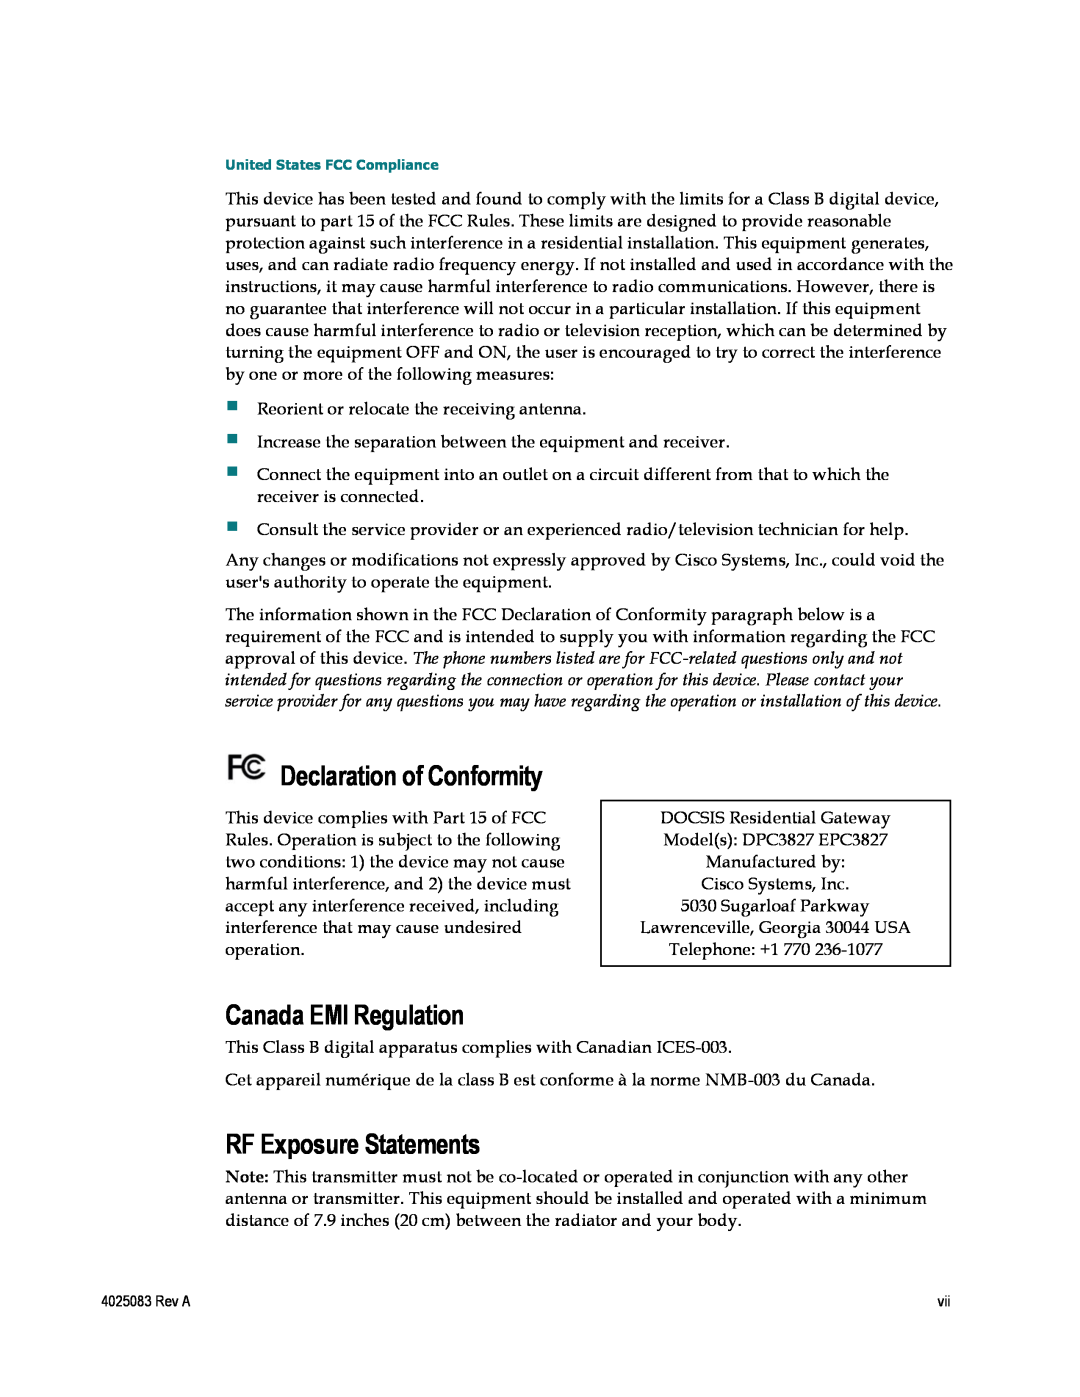 Cisco Systems DPC3827, EPC3827, 4039760 Declaration of Conformity, Canada EMI Regulation, RF Exposure Statements 